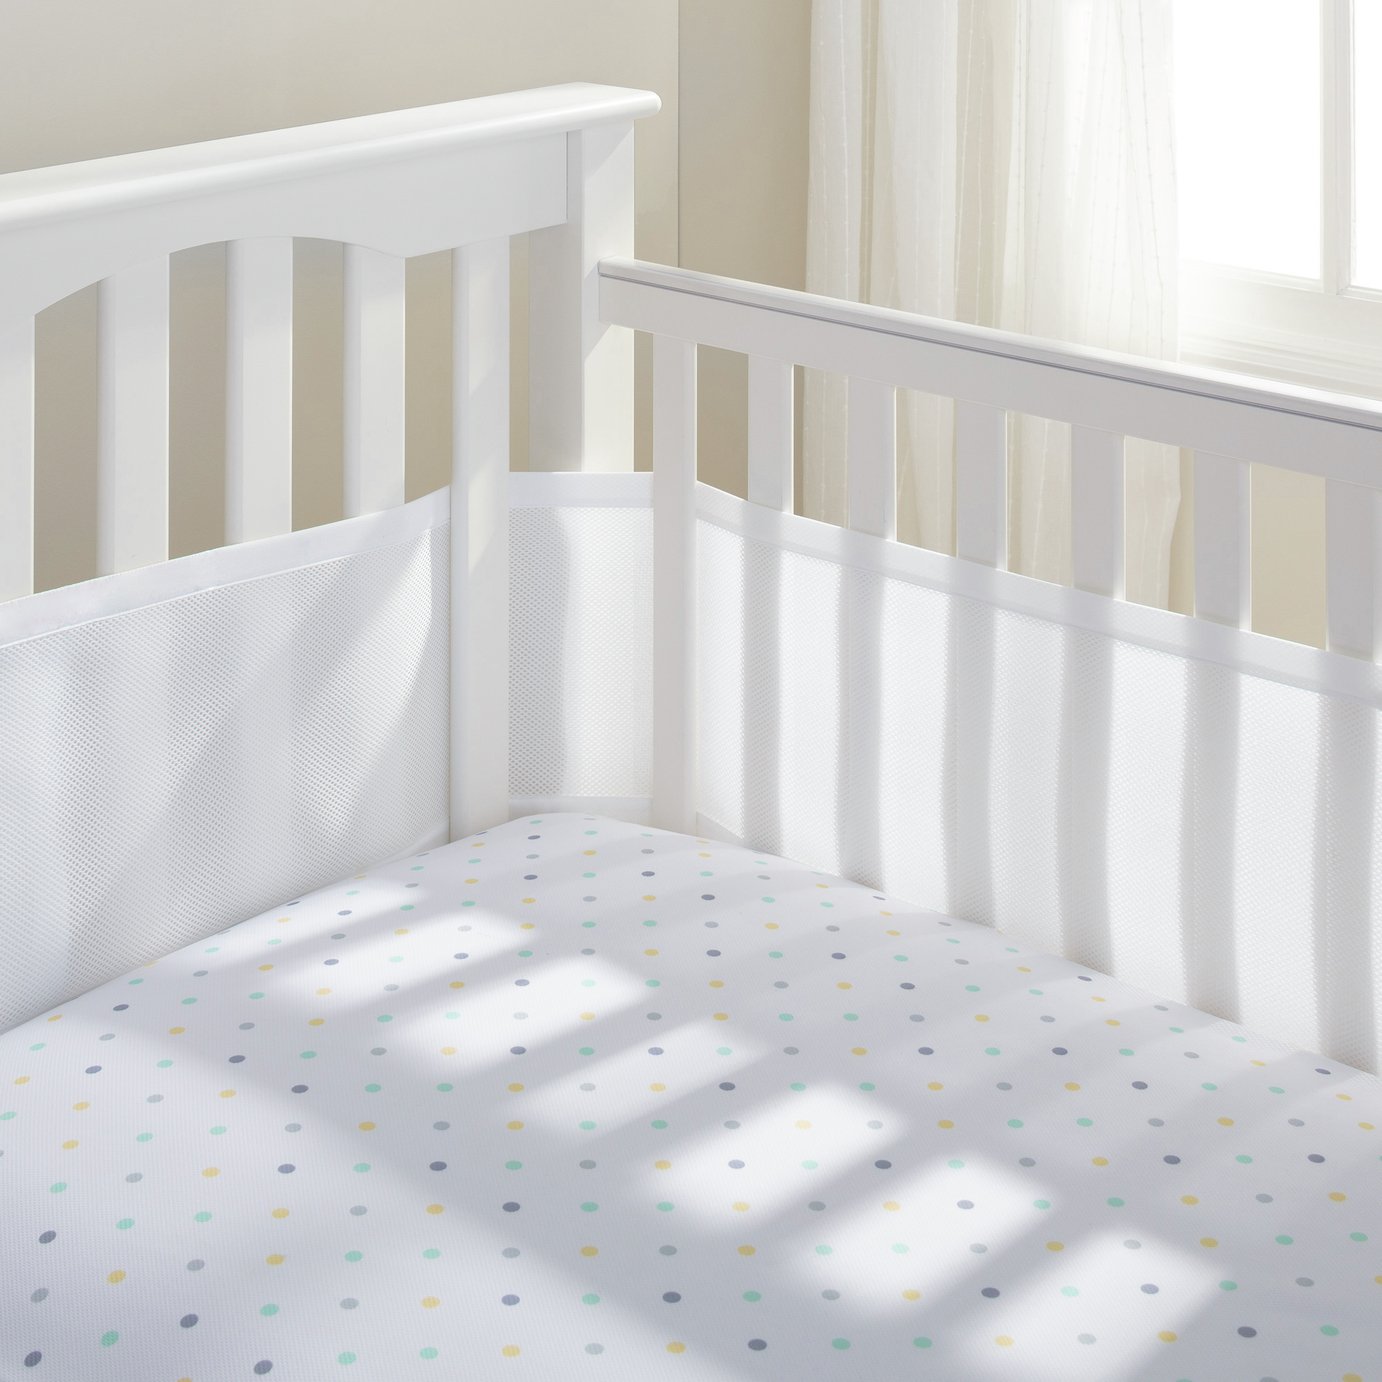 simmons health assure organic crib mattress